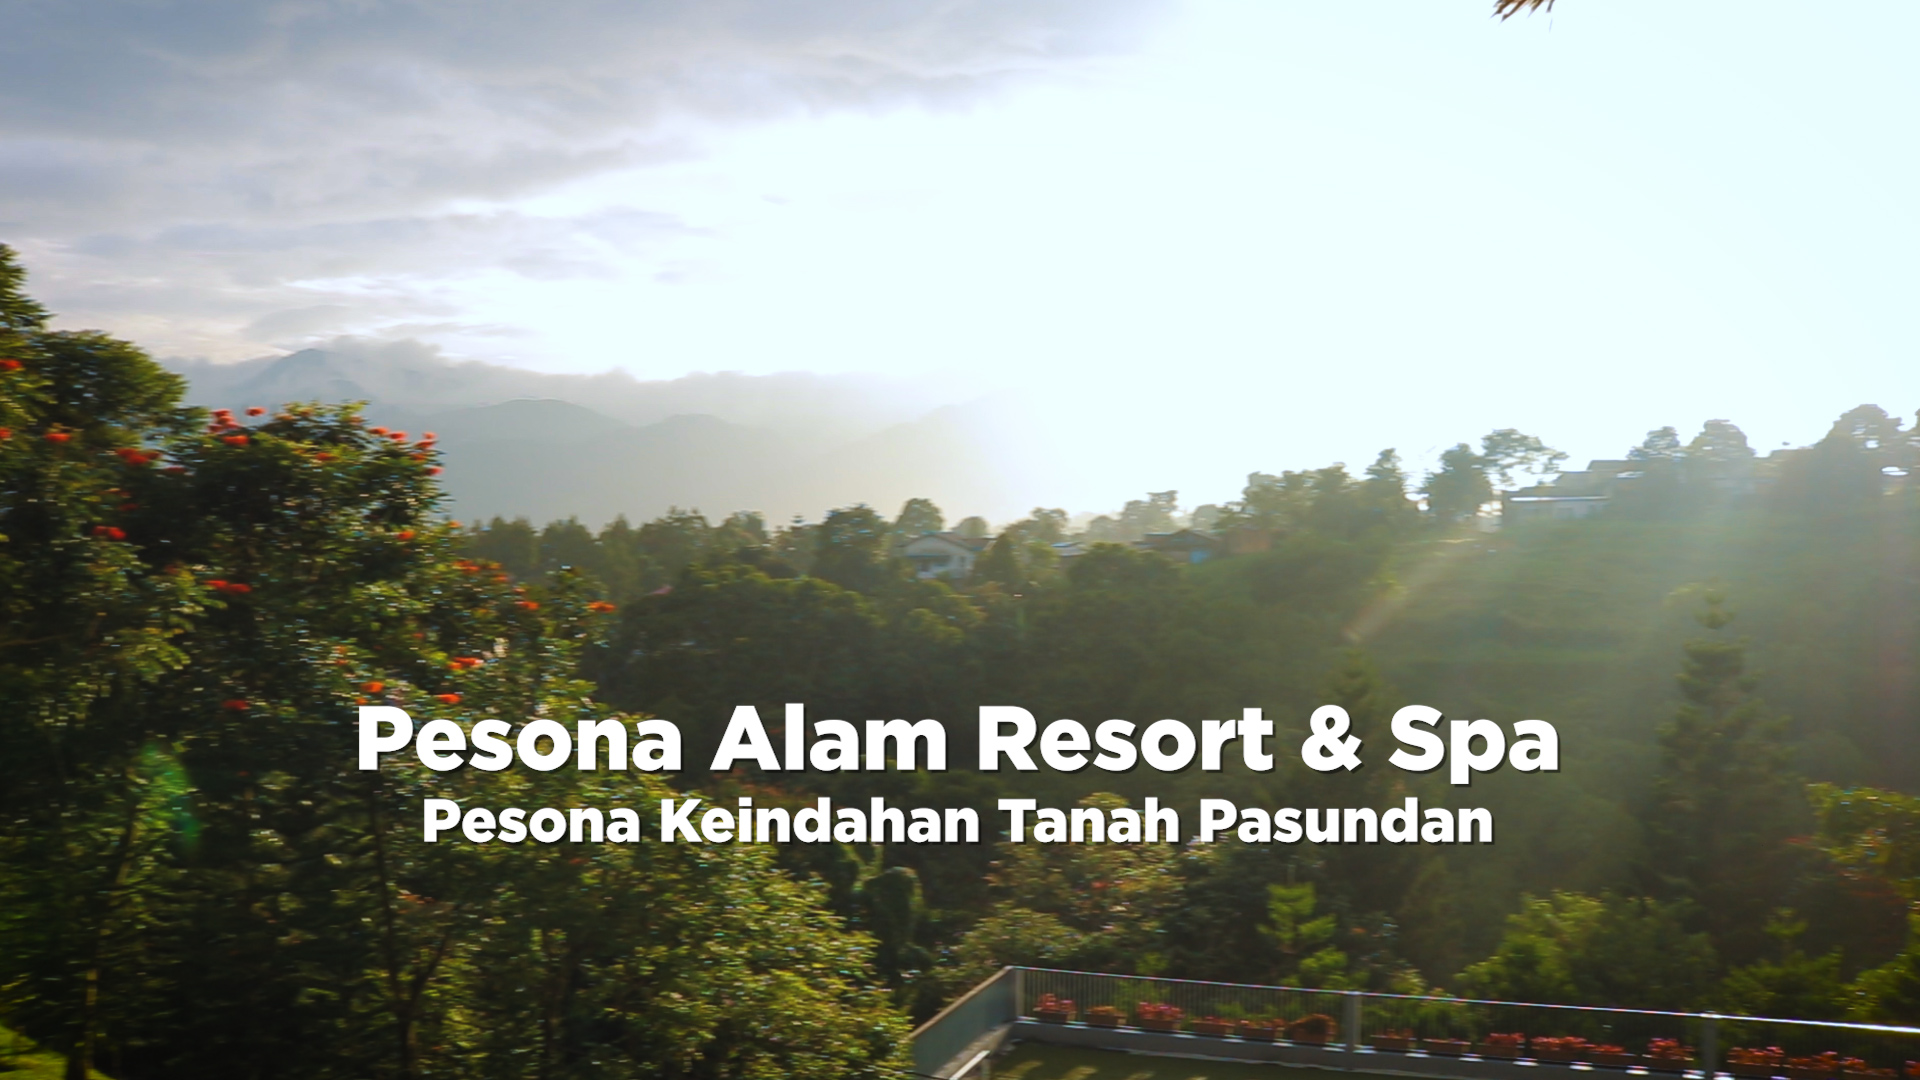 Pesona Alam Resort & Spa, Pesona Keindahan Tanah Pasundan